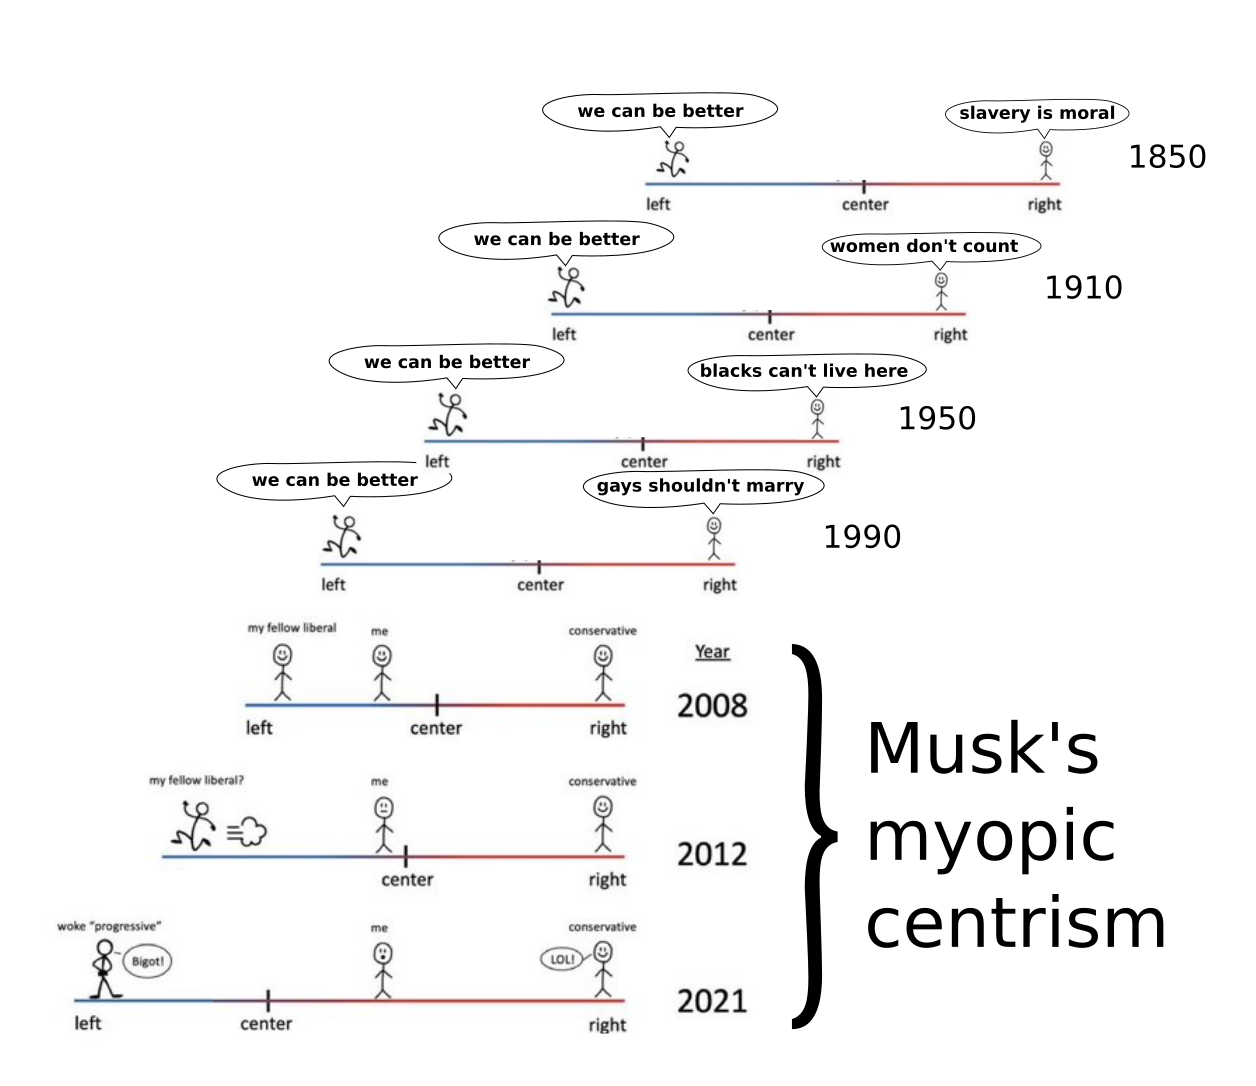 Musk's myopic centrism